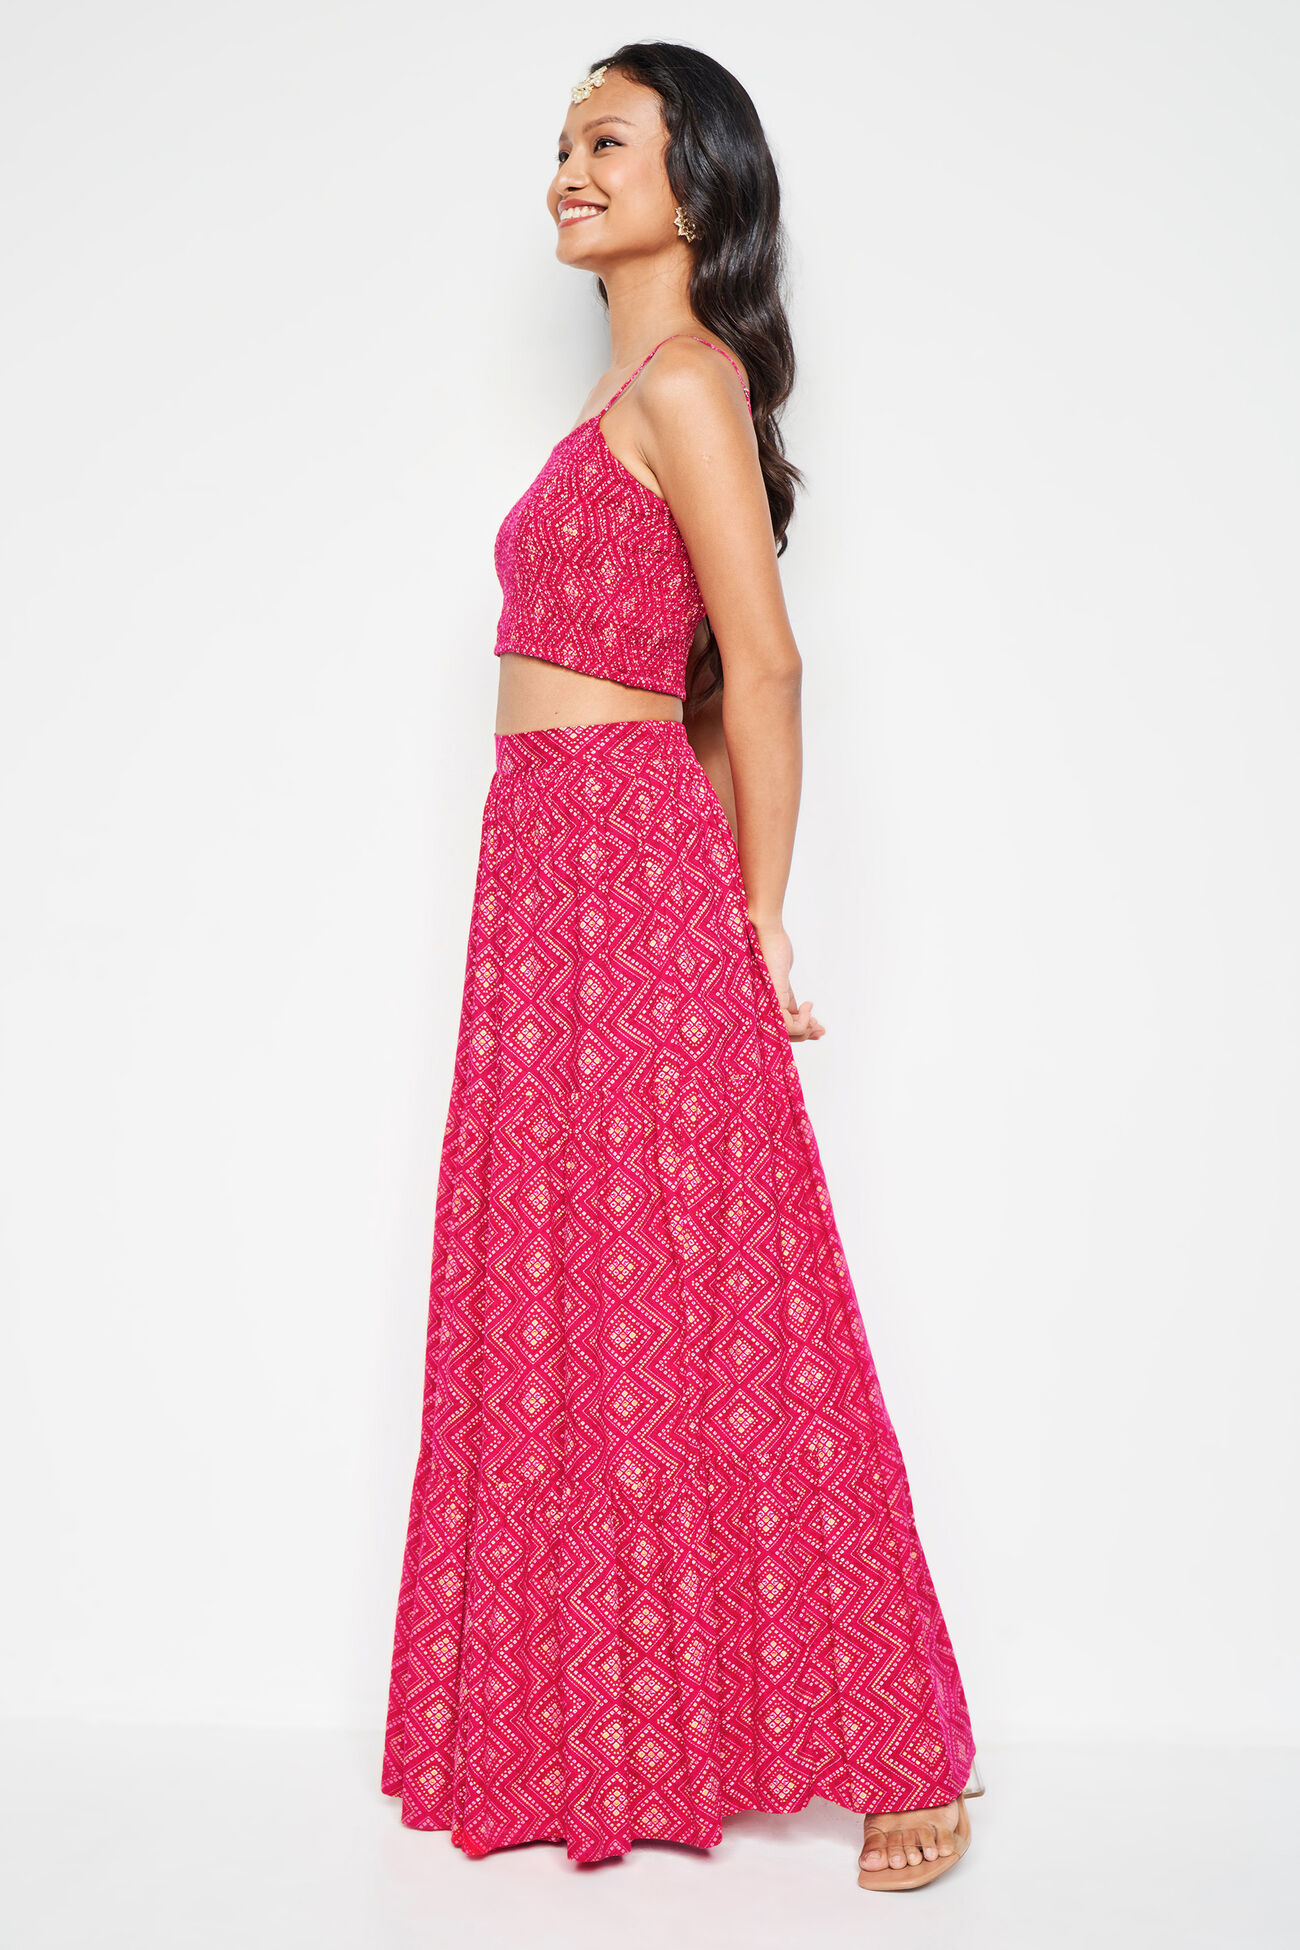 Golapi Skirt Set, Pink, image 7